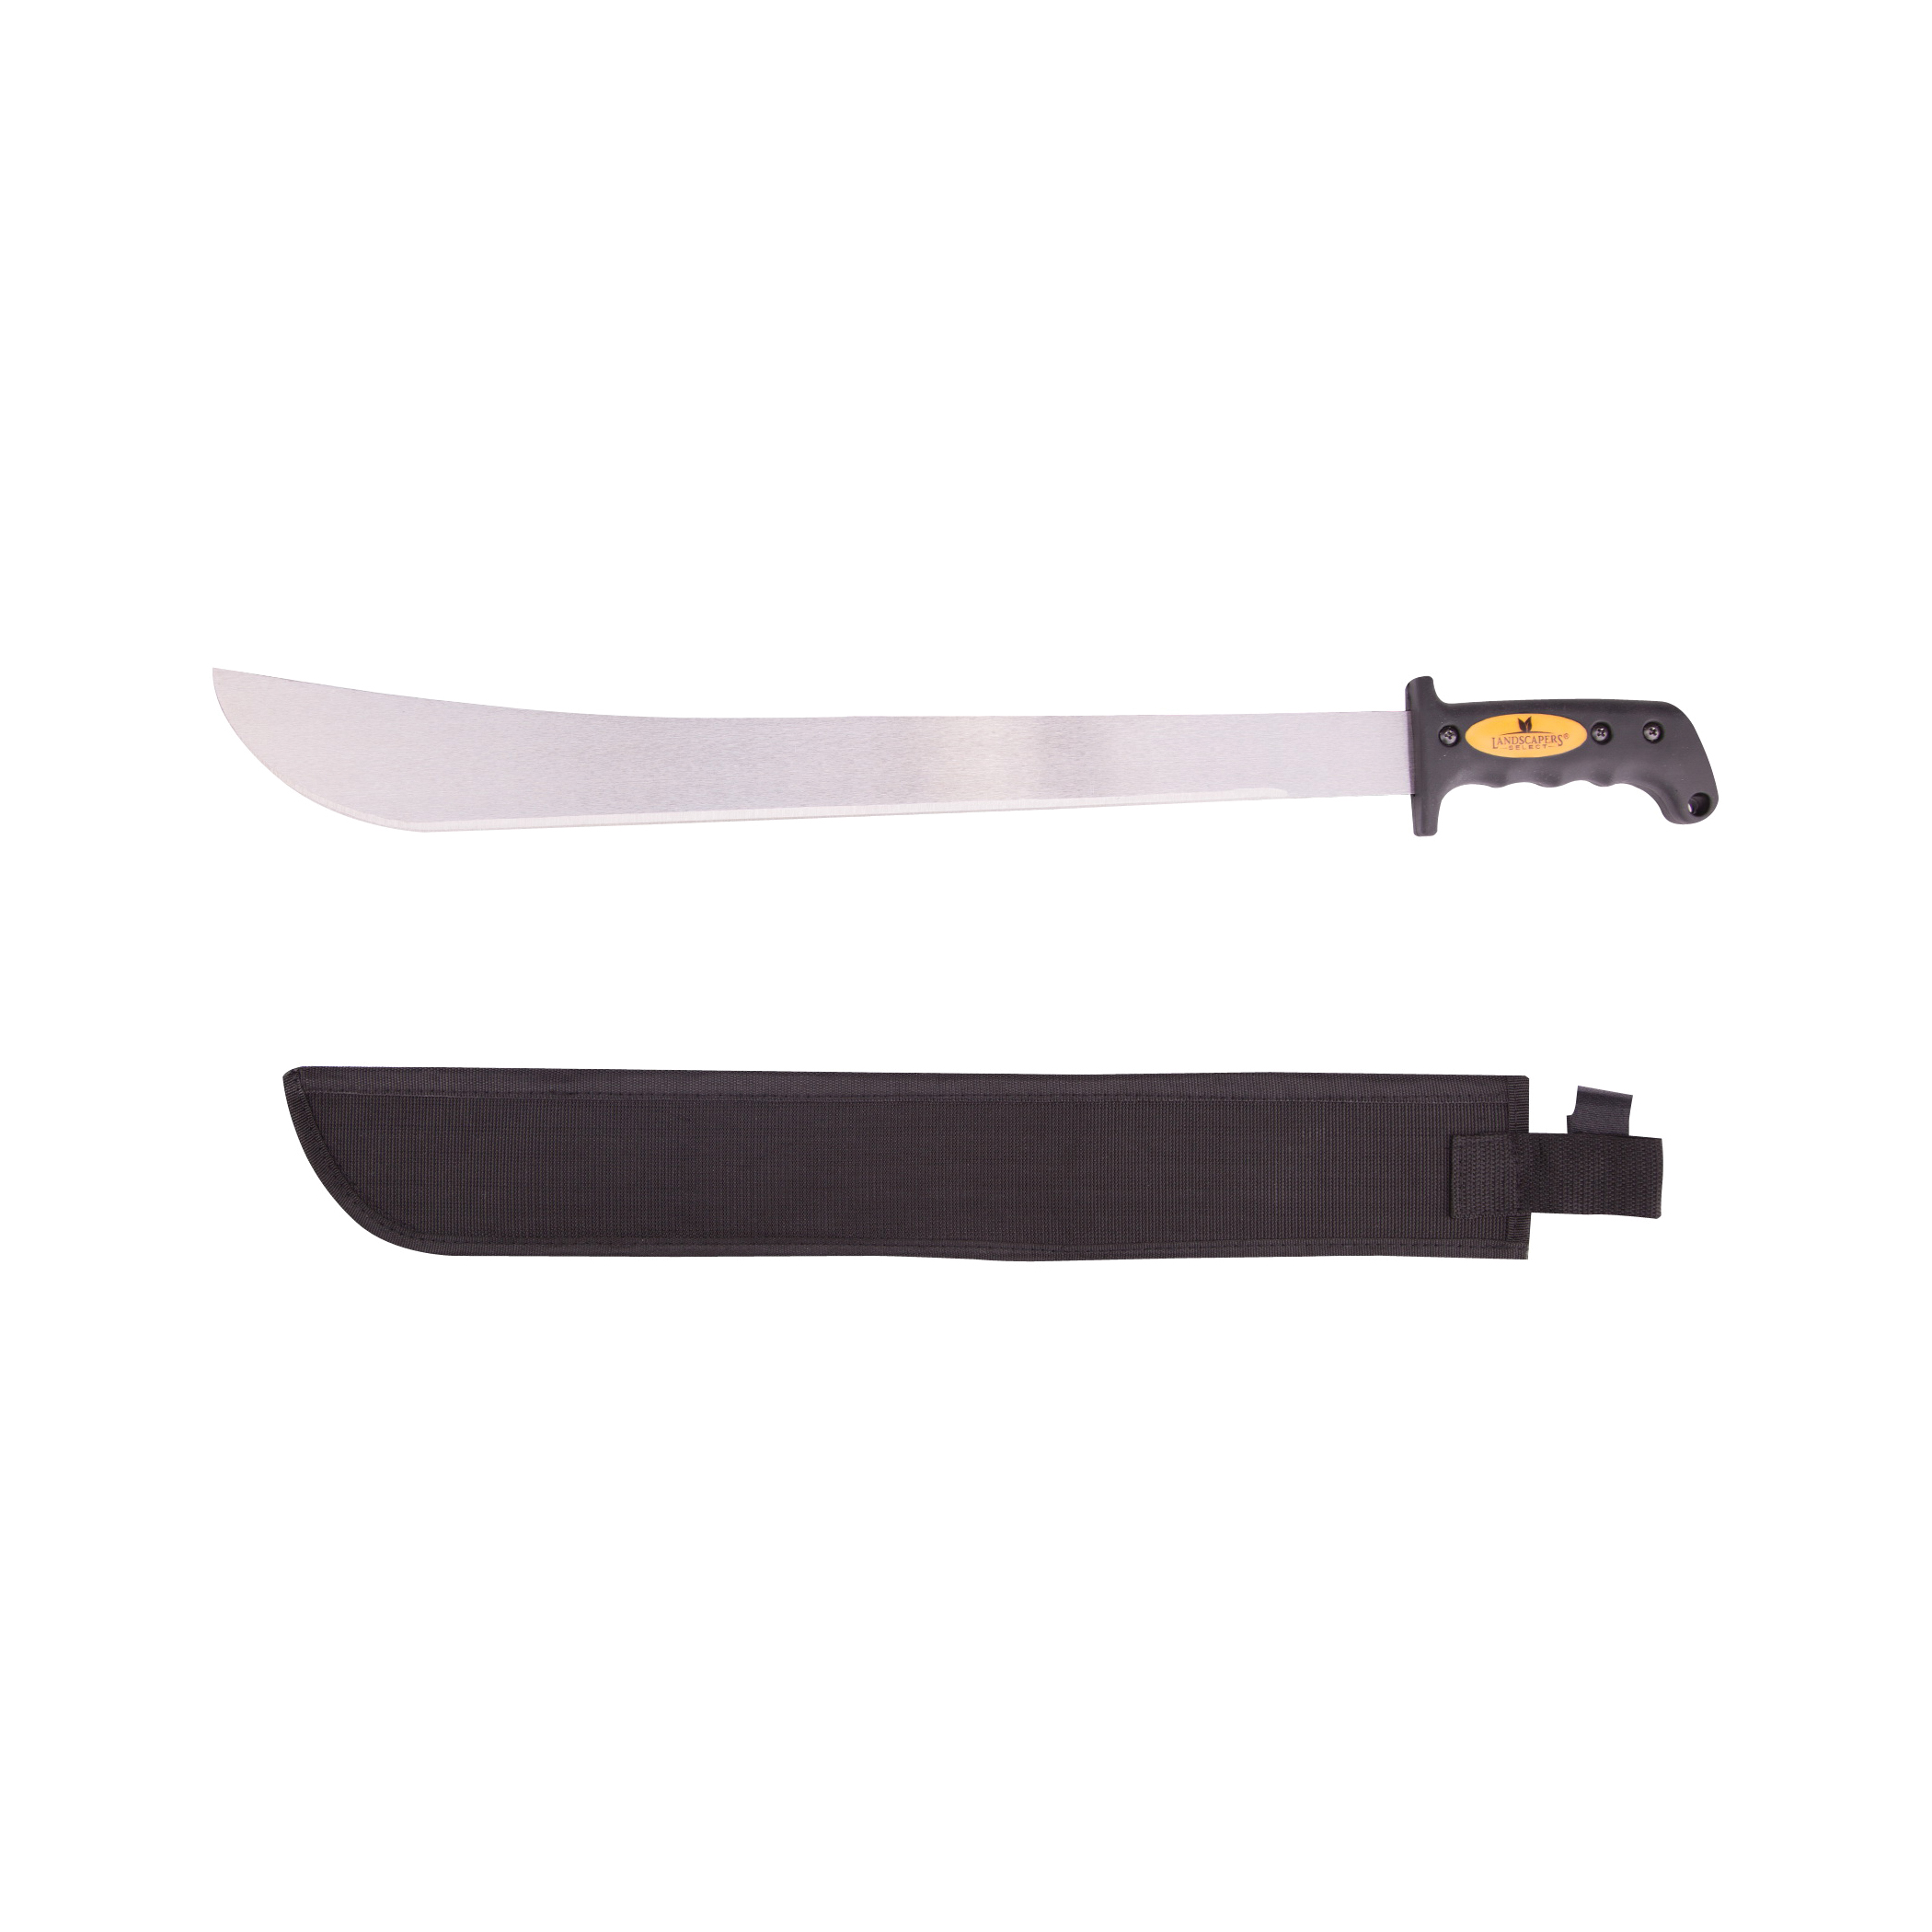 JLO-003-N3L 22 in Blade, 27-1/2 in OAL, 22 in Blade, High Carbon Steel Blade, Rubber Handle